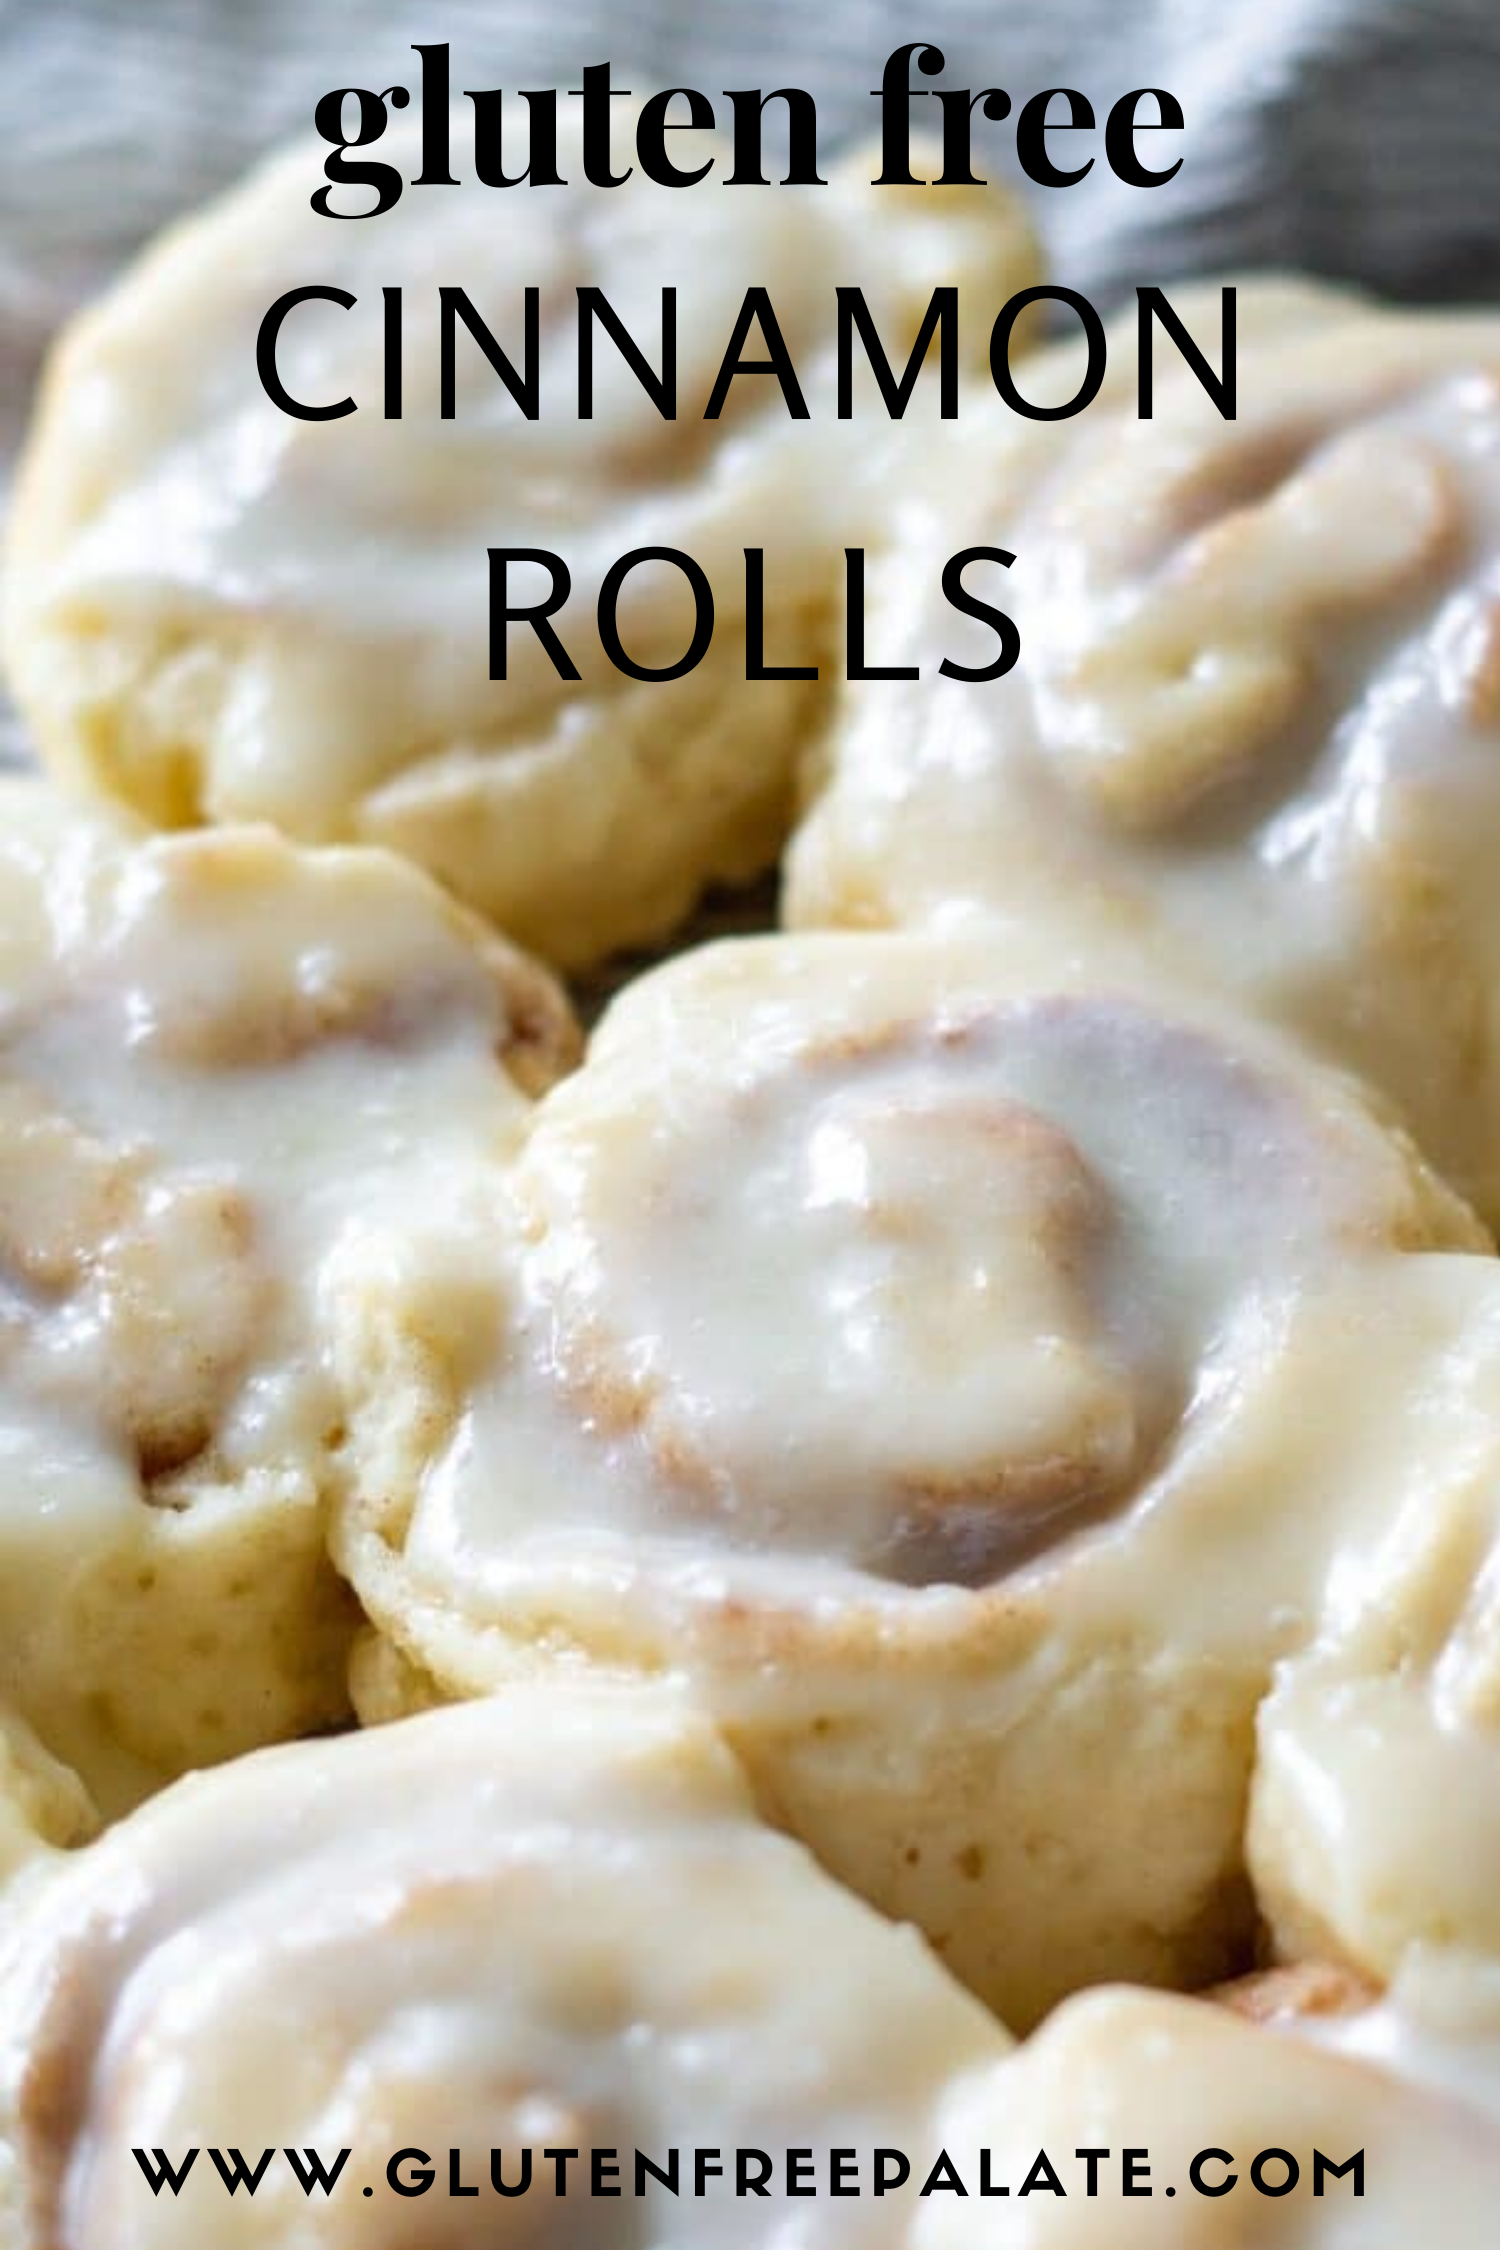 Gluten-free cinnamon rolls close up view.